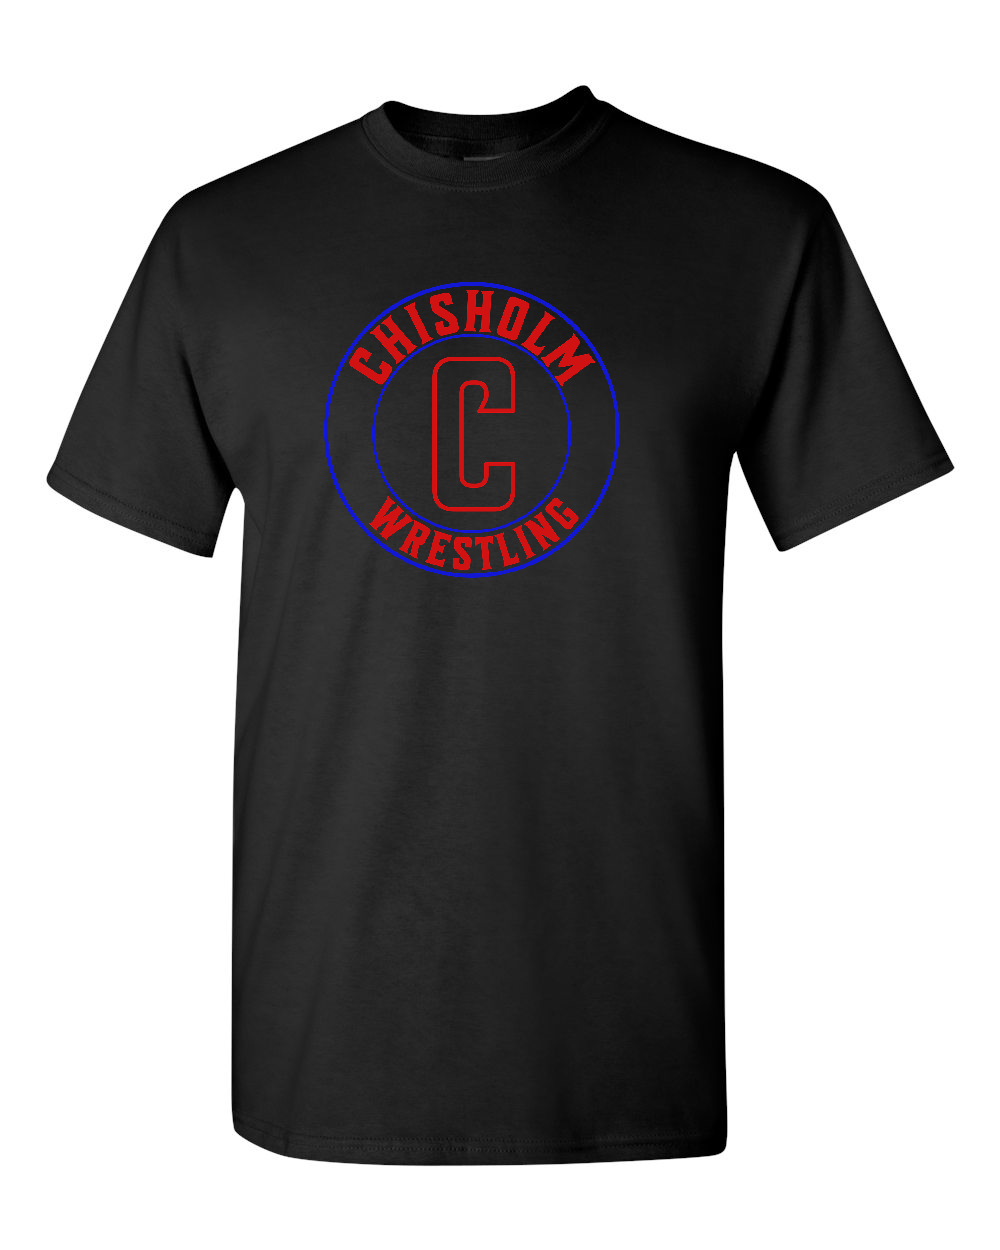 Chisholm Wrestling Club - Standard T shirt with Circle C logo